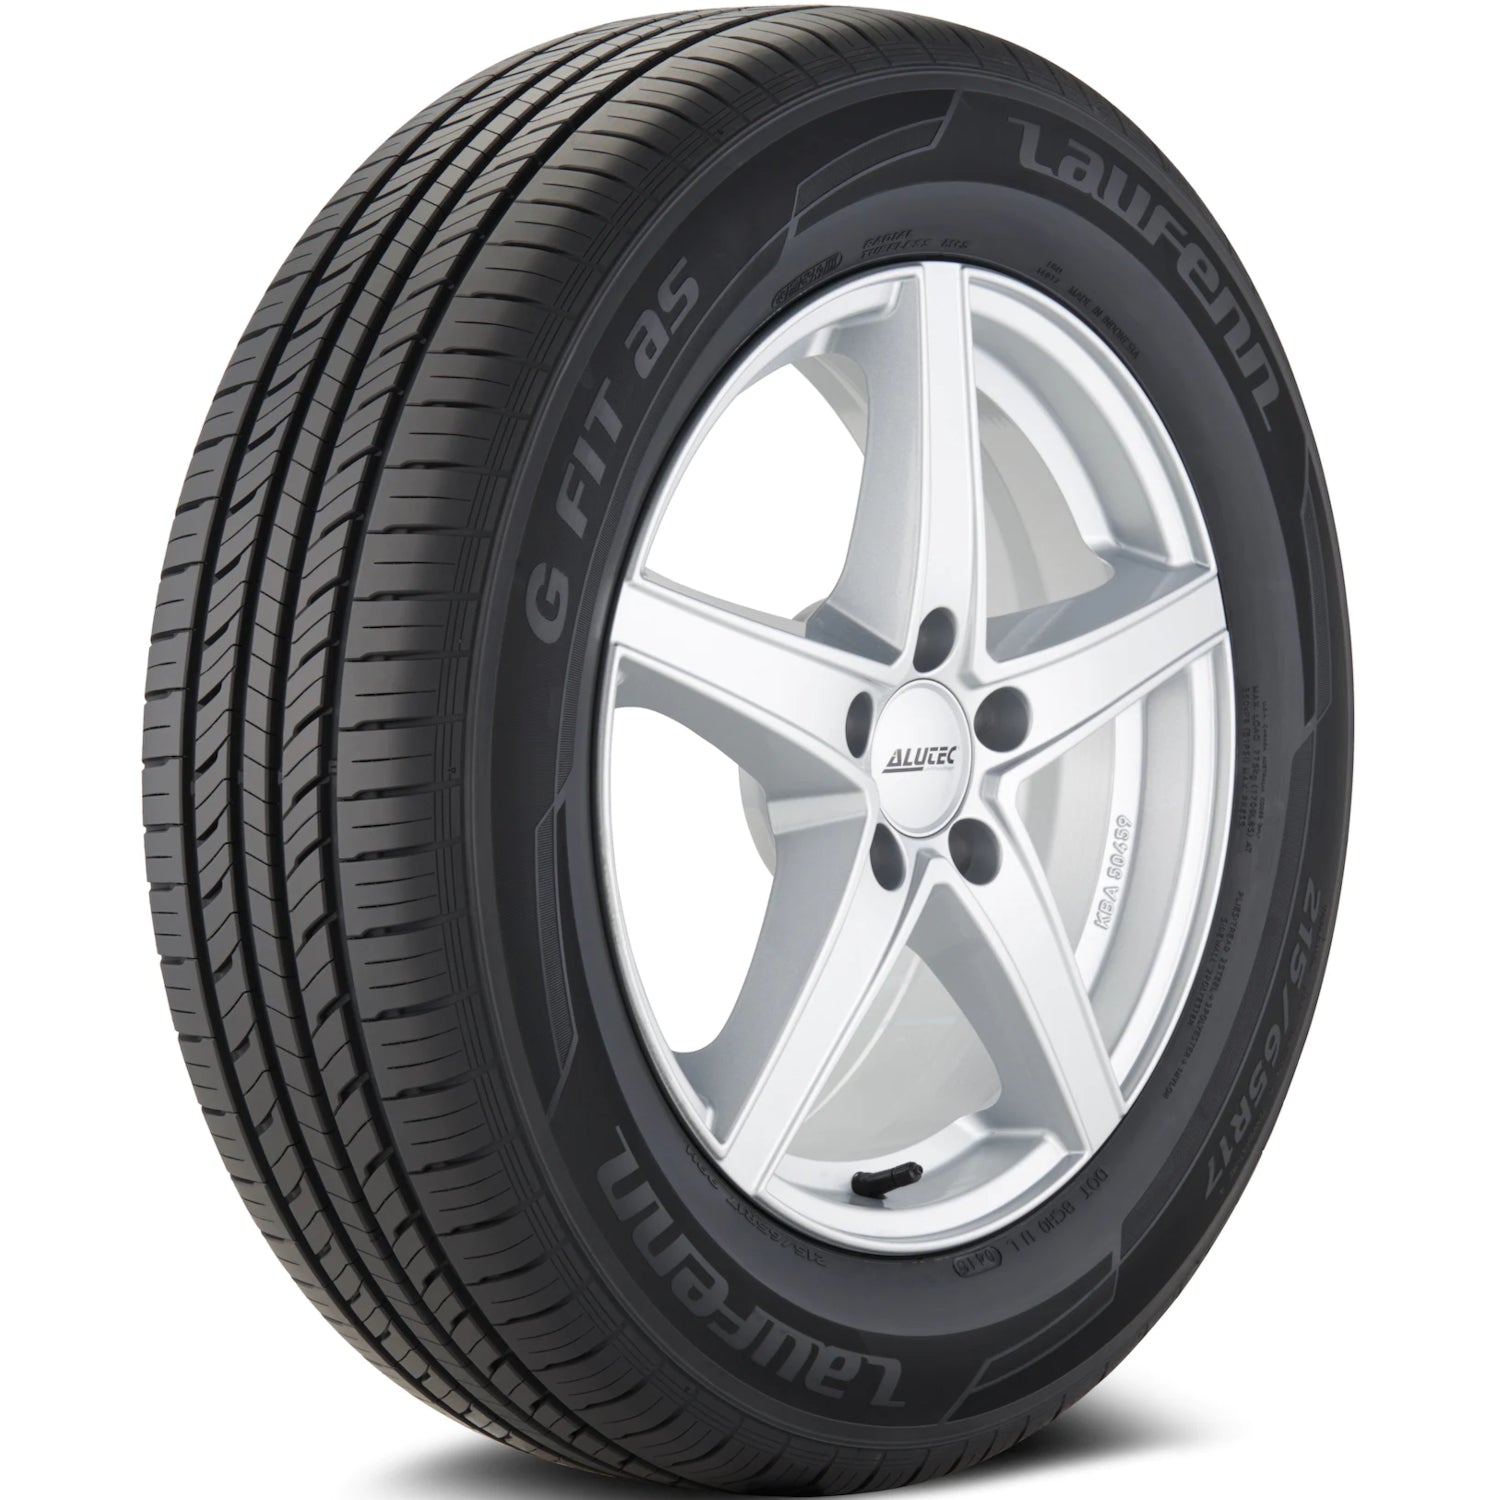 LAUFENN G FIT AS 215/50R17XL (25.5X8.5R 17) Tires